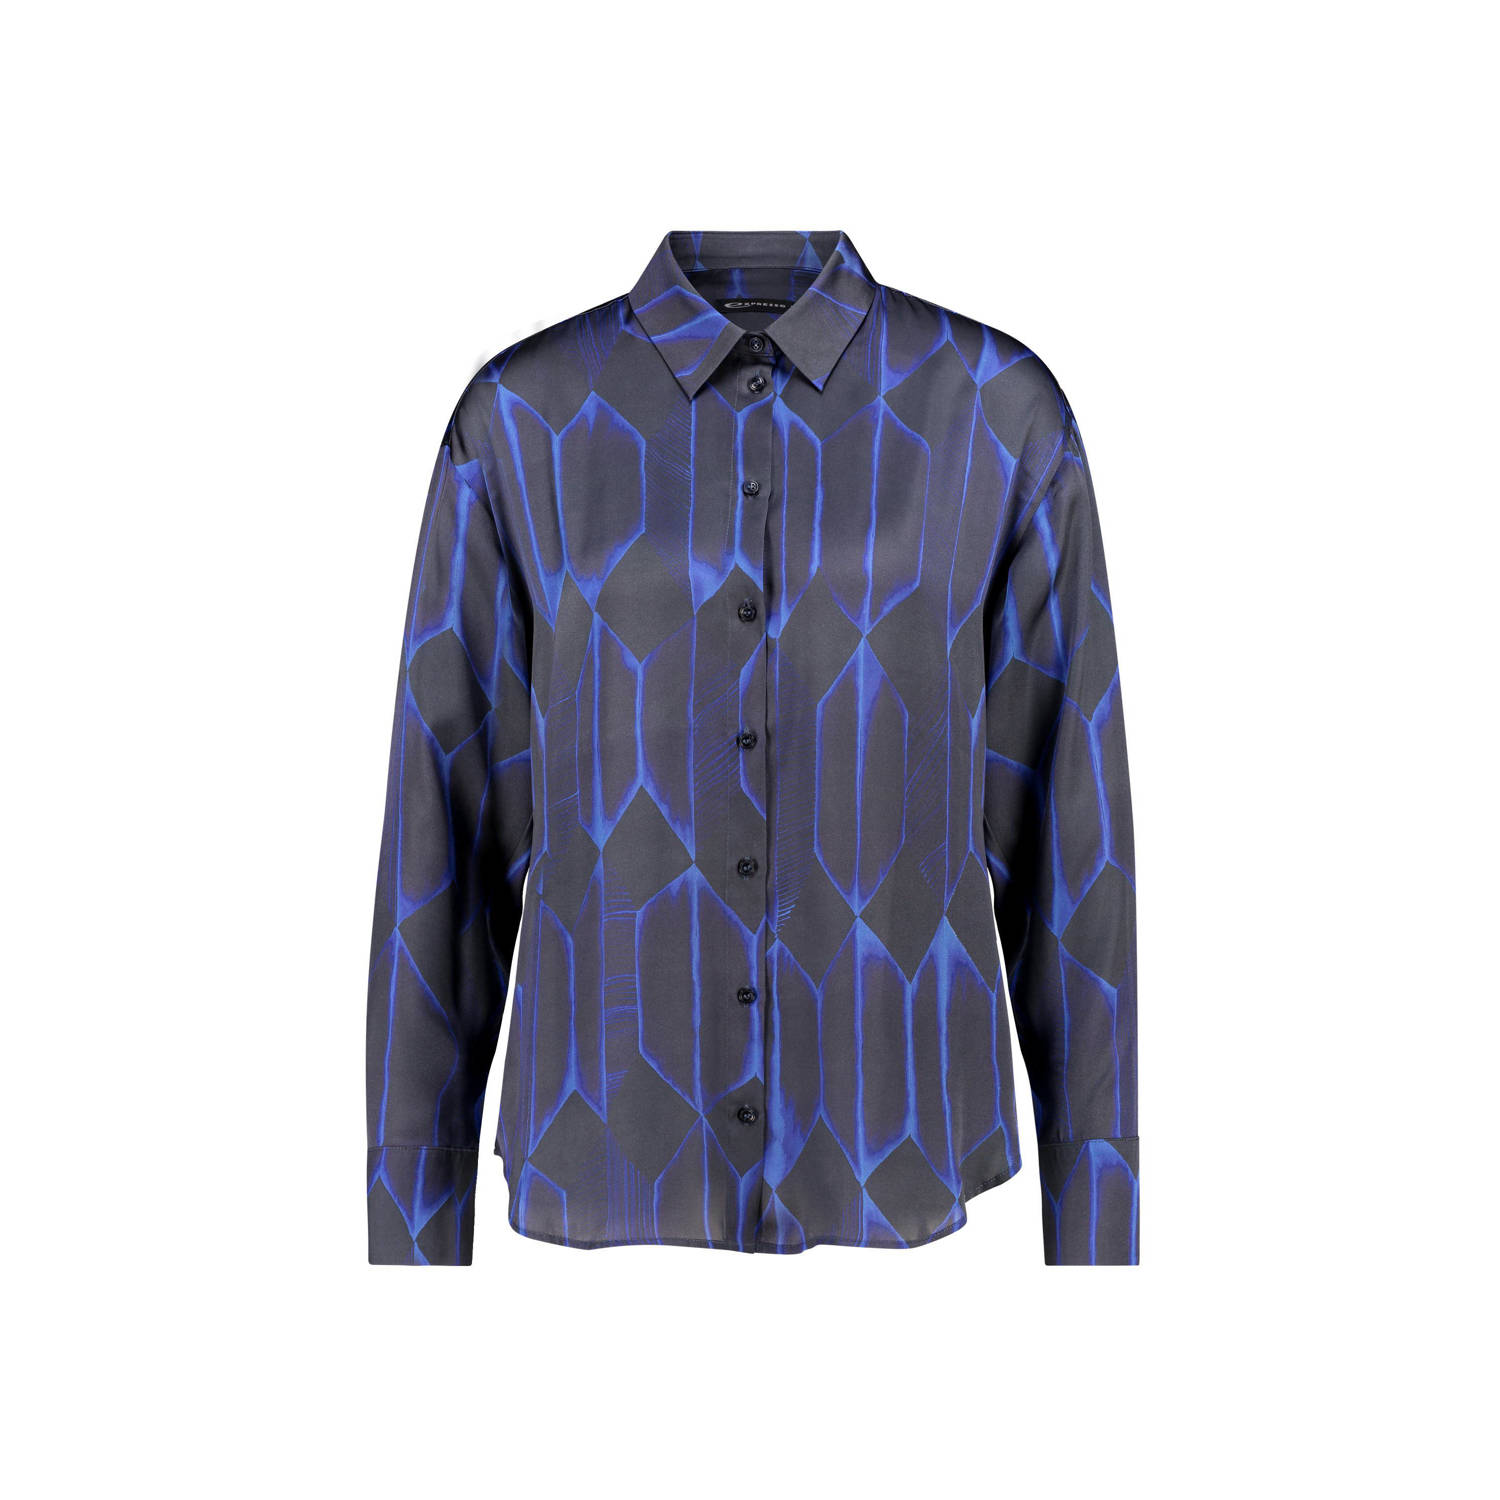 Expresso geweven blouse met grafische print blauw